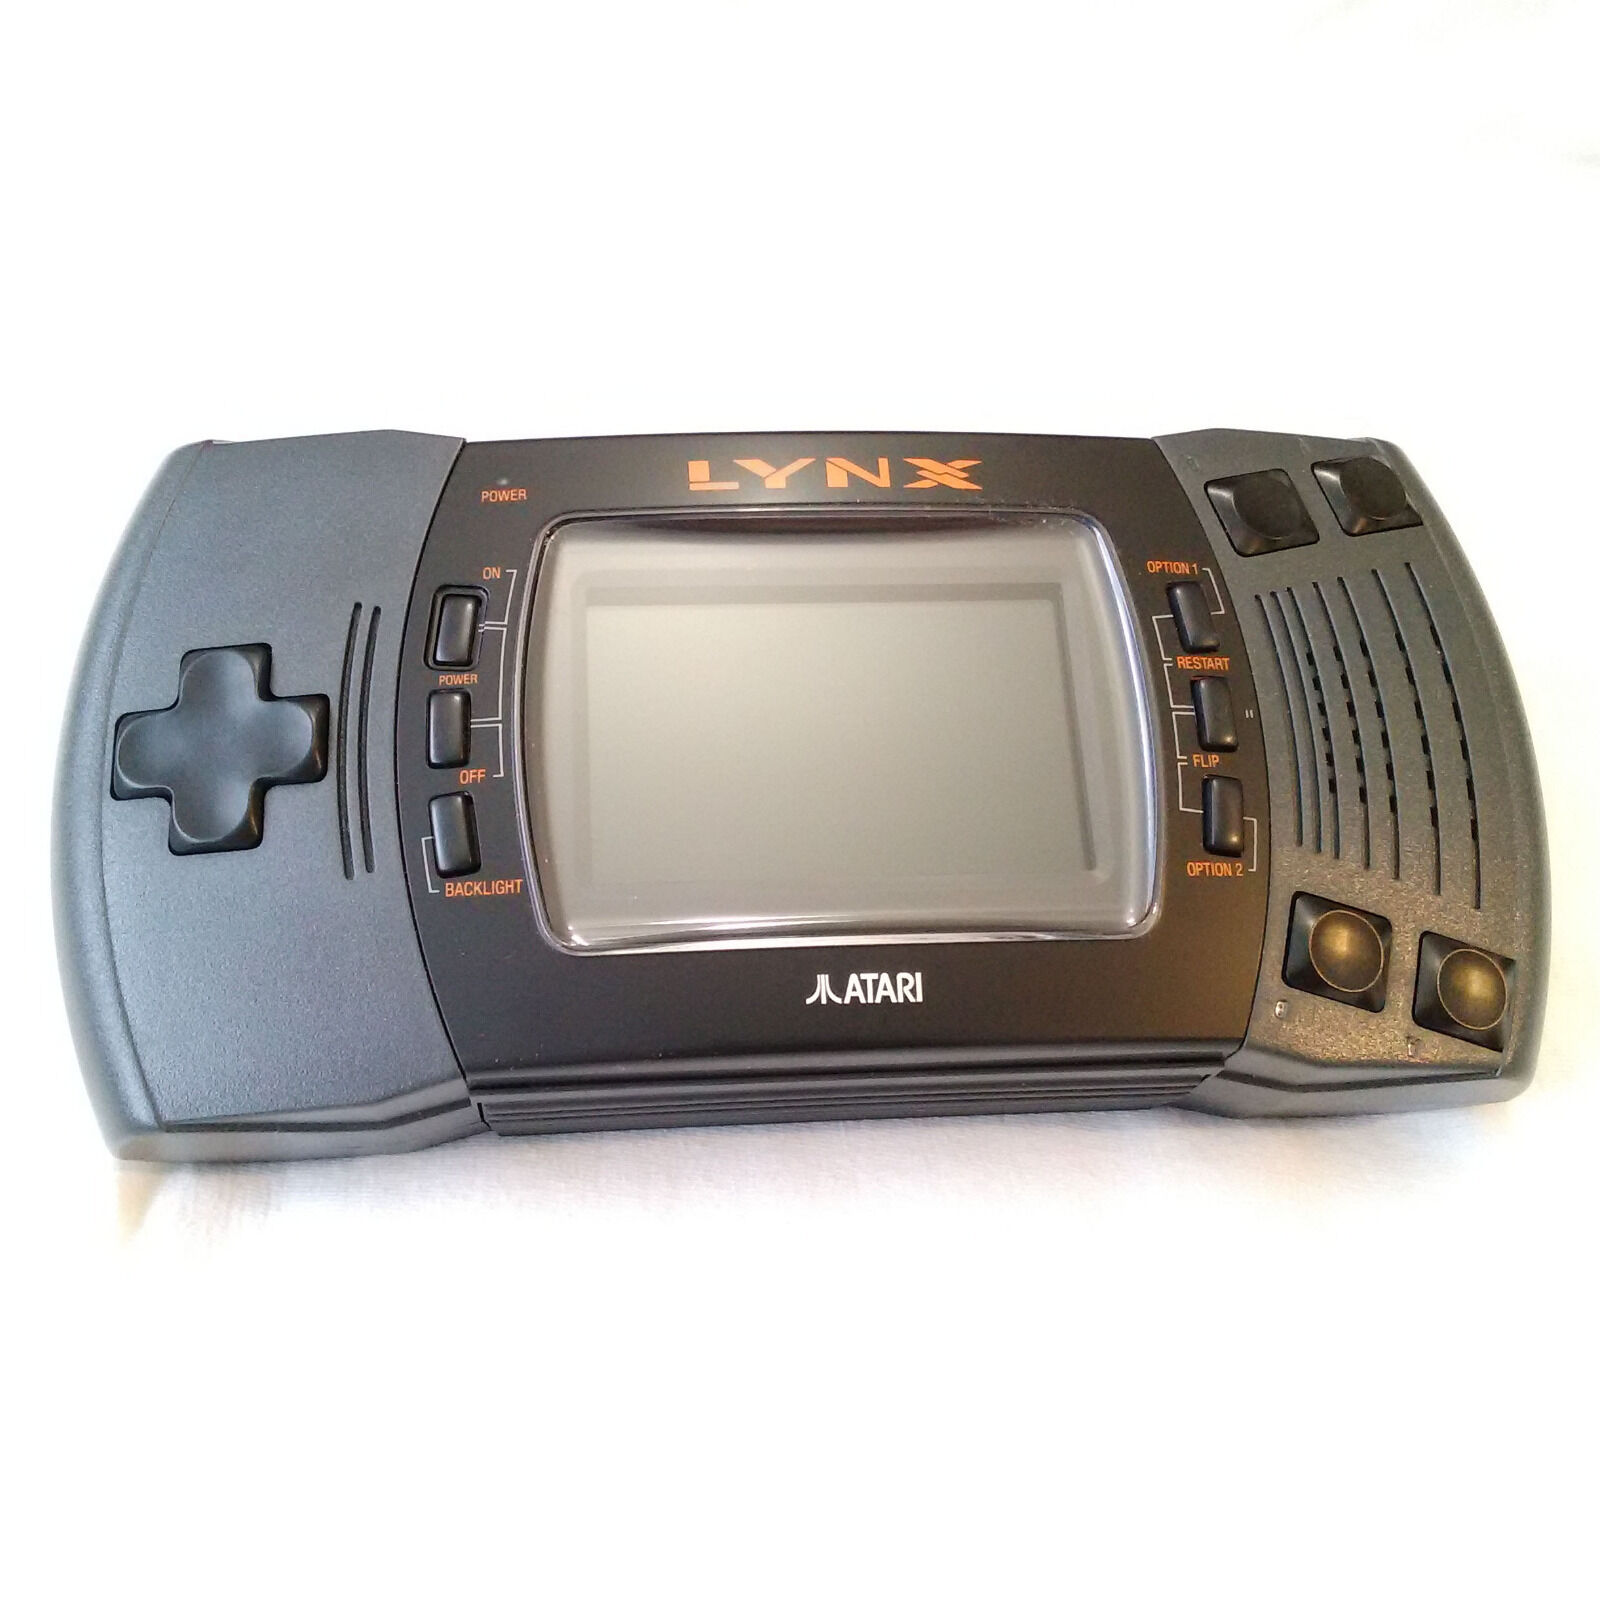 Console de jeu Atari LYNX II neuve (spéciale collectionneur) Populair nieuwste product